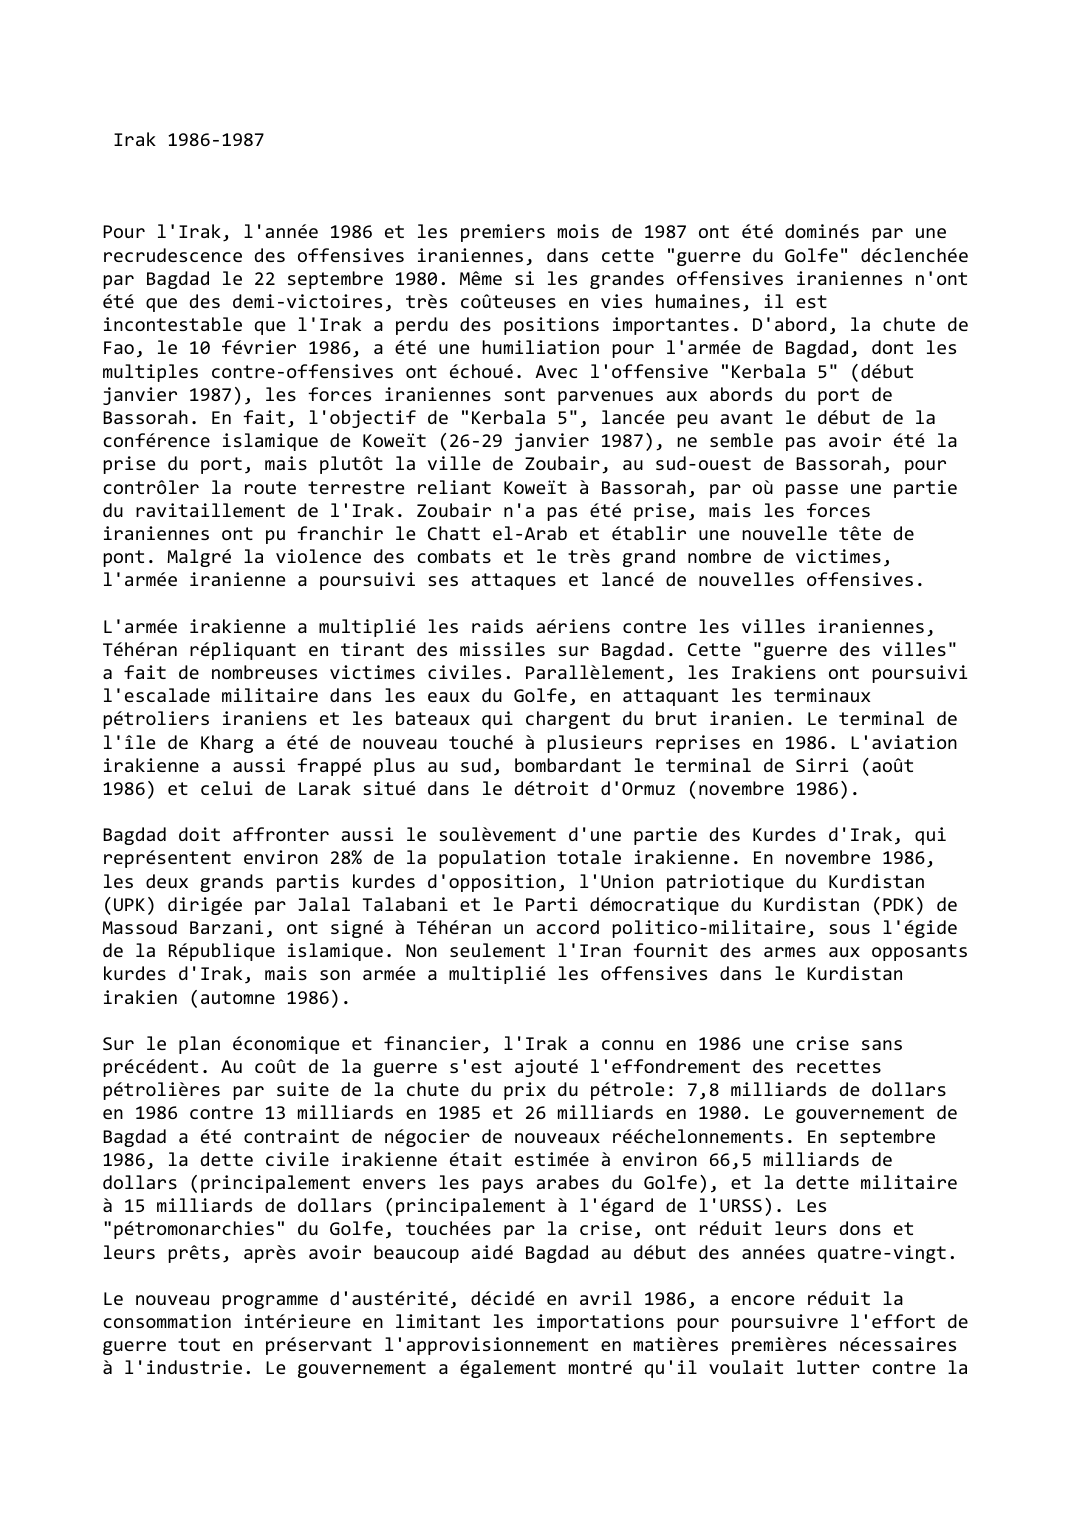 Prévisualisation du document Irak (1986-1987)